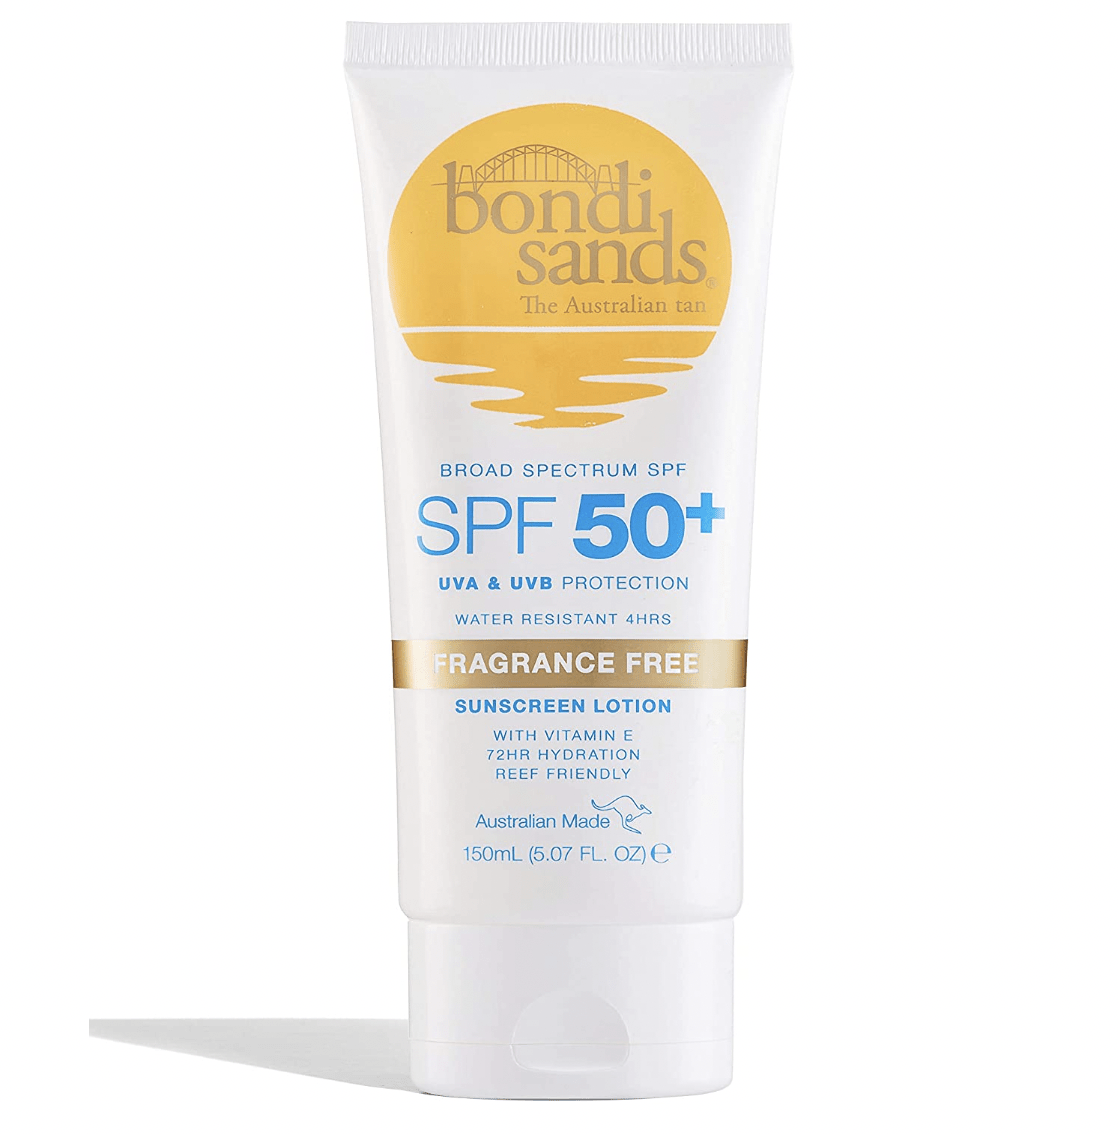 Bondi Sands Fragrance Free Sunscreen Lotion SPF 50+